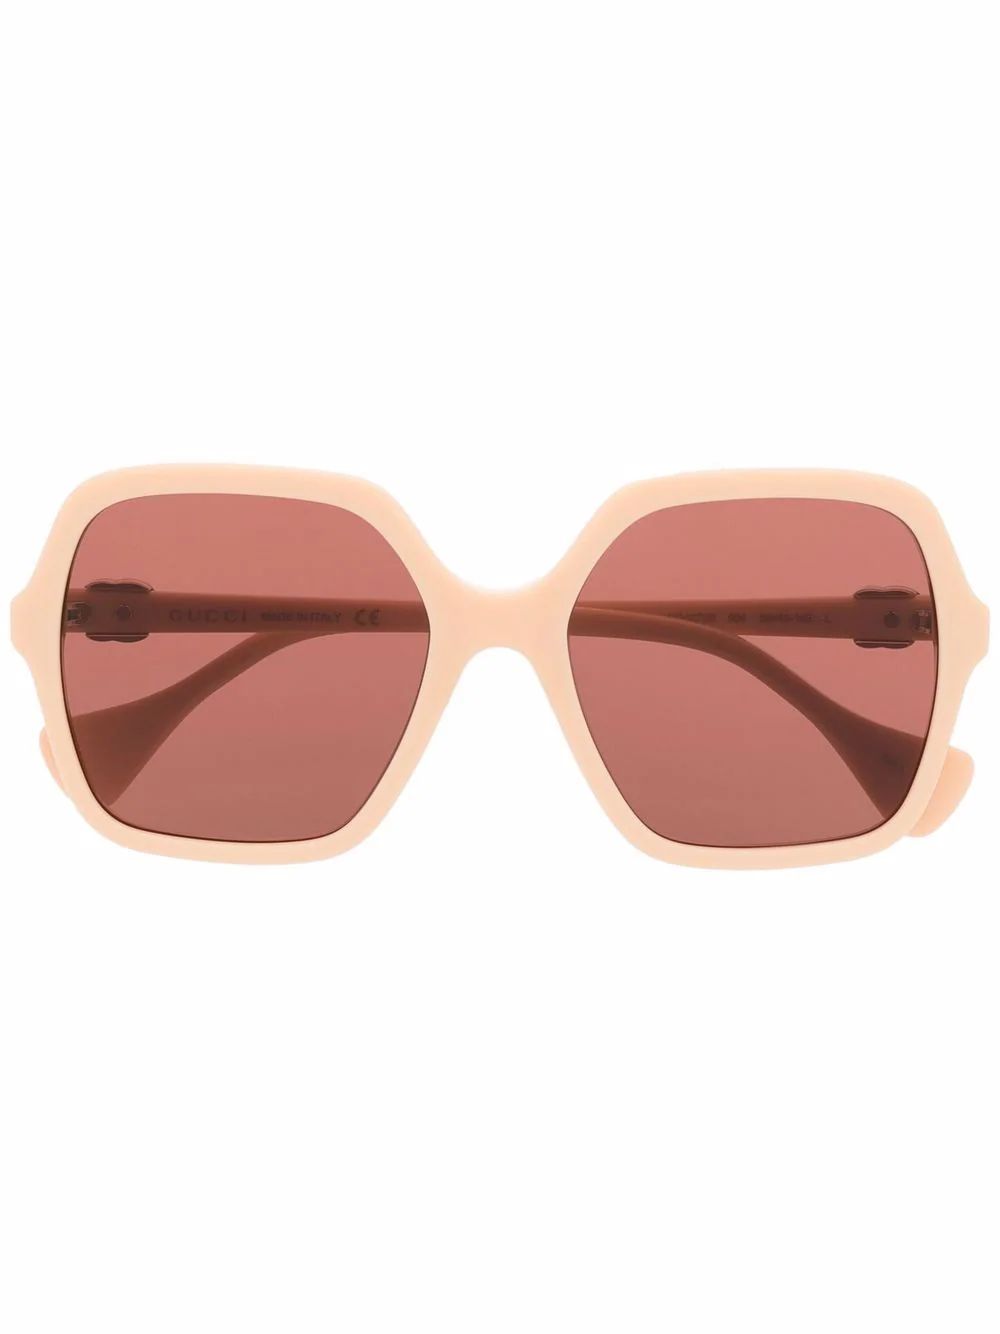 GG oversized sunglasses | Farfetch Global